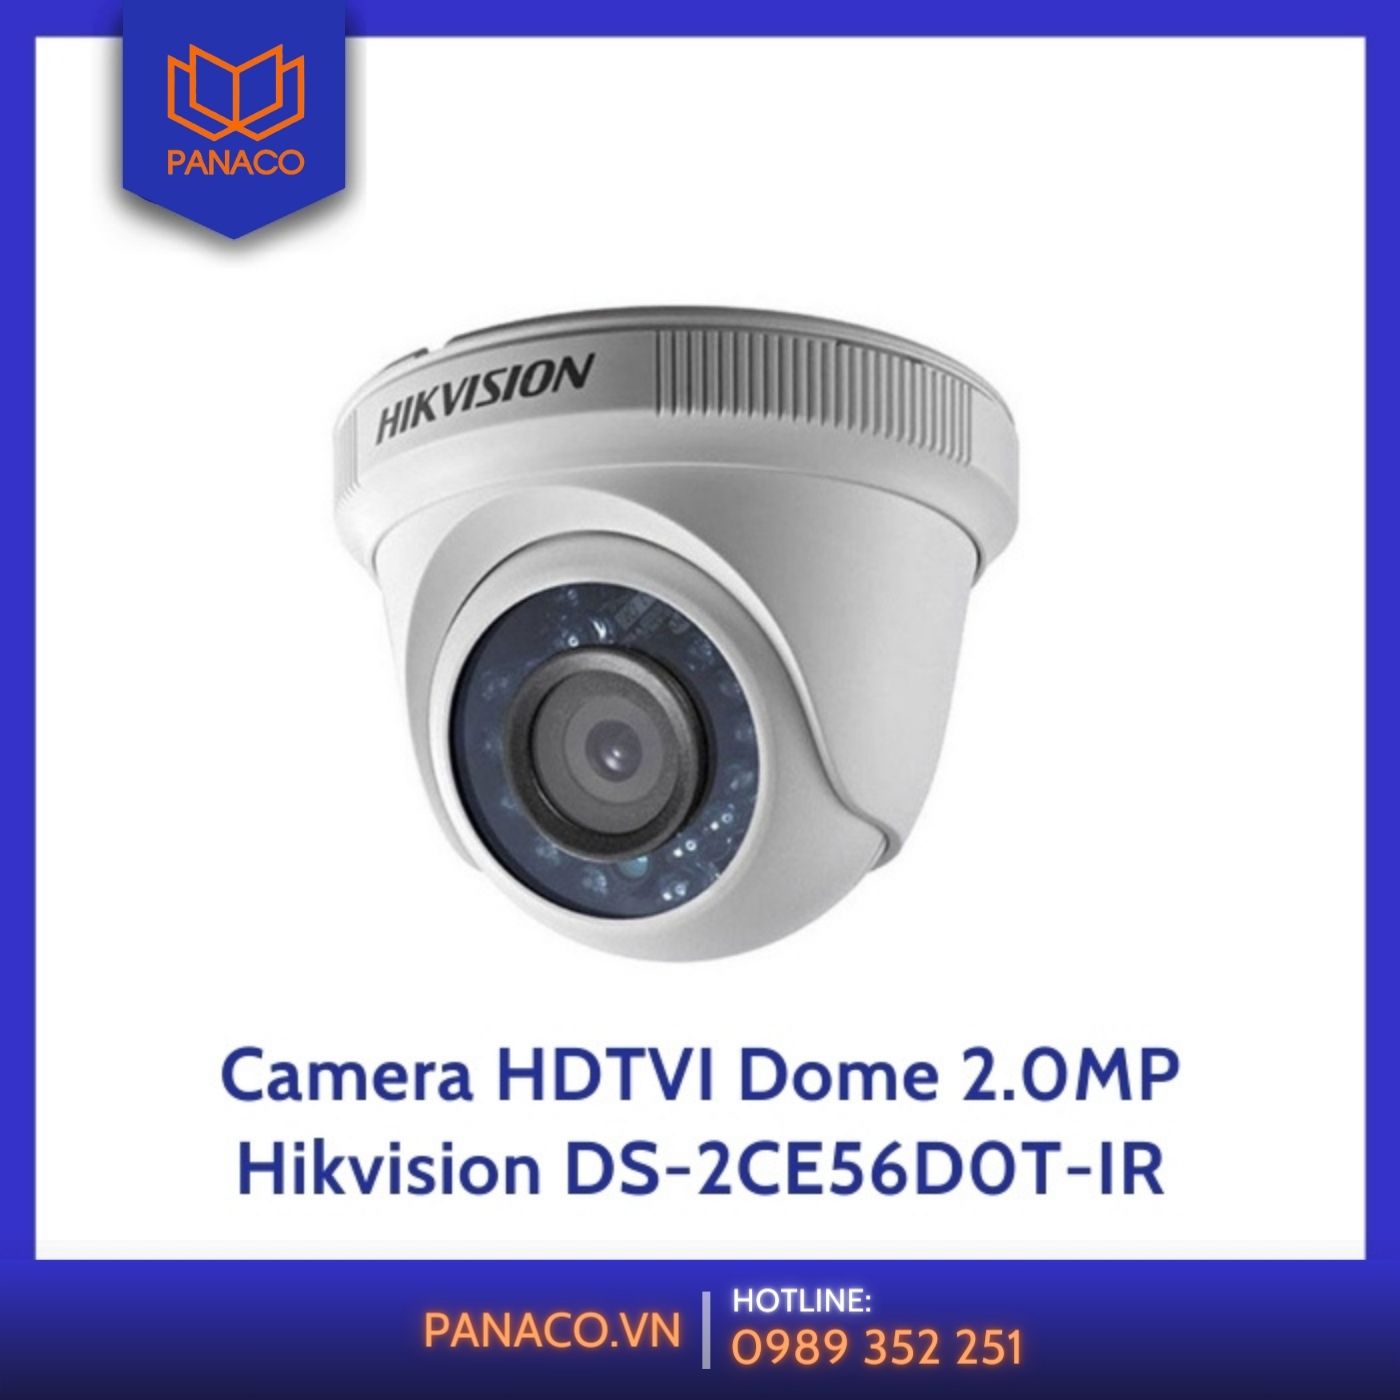 Camera HDTVI Dome Hikvision DS-2CE56D0T-IR 2.0MP